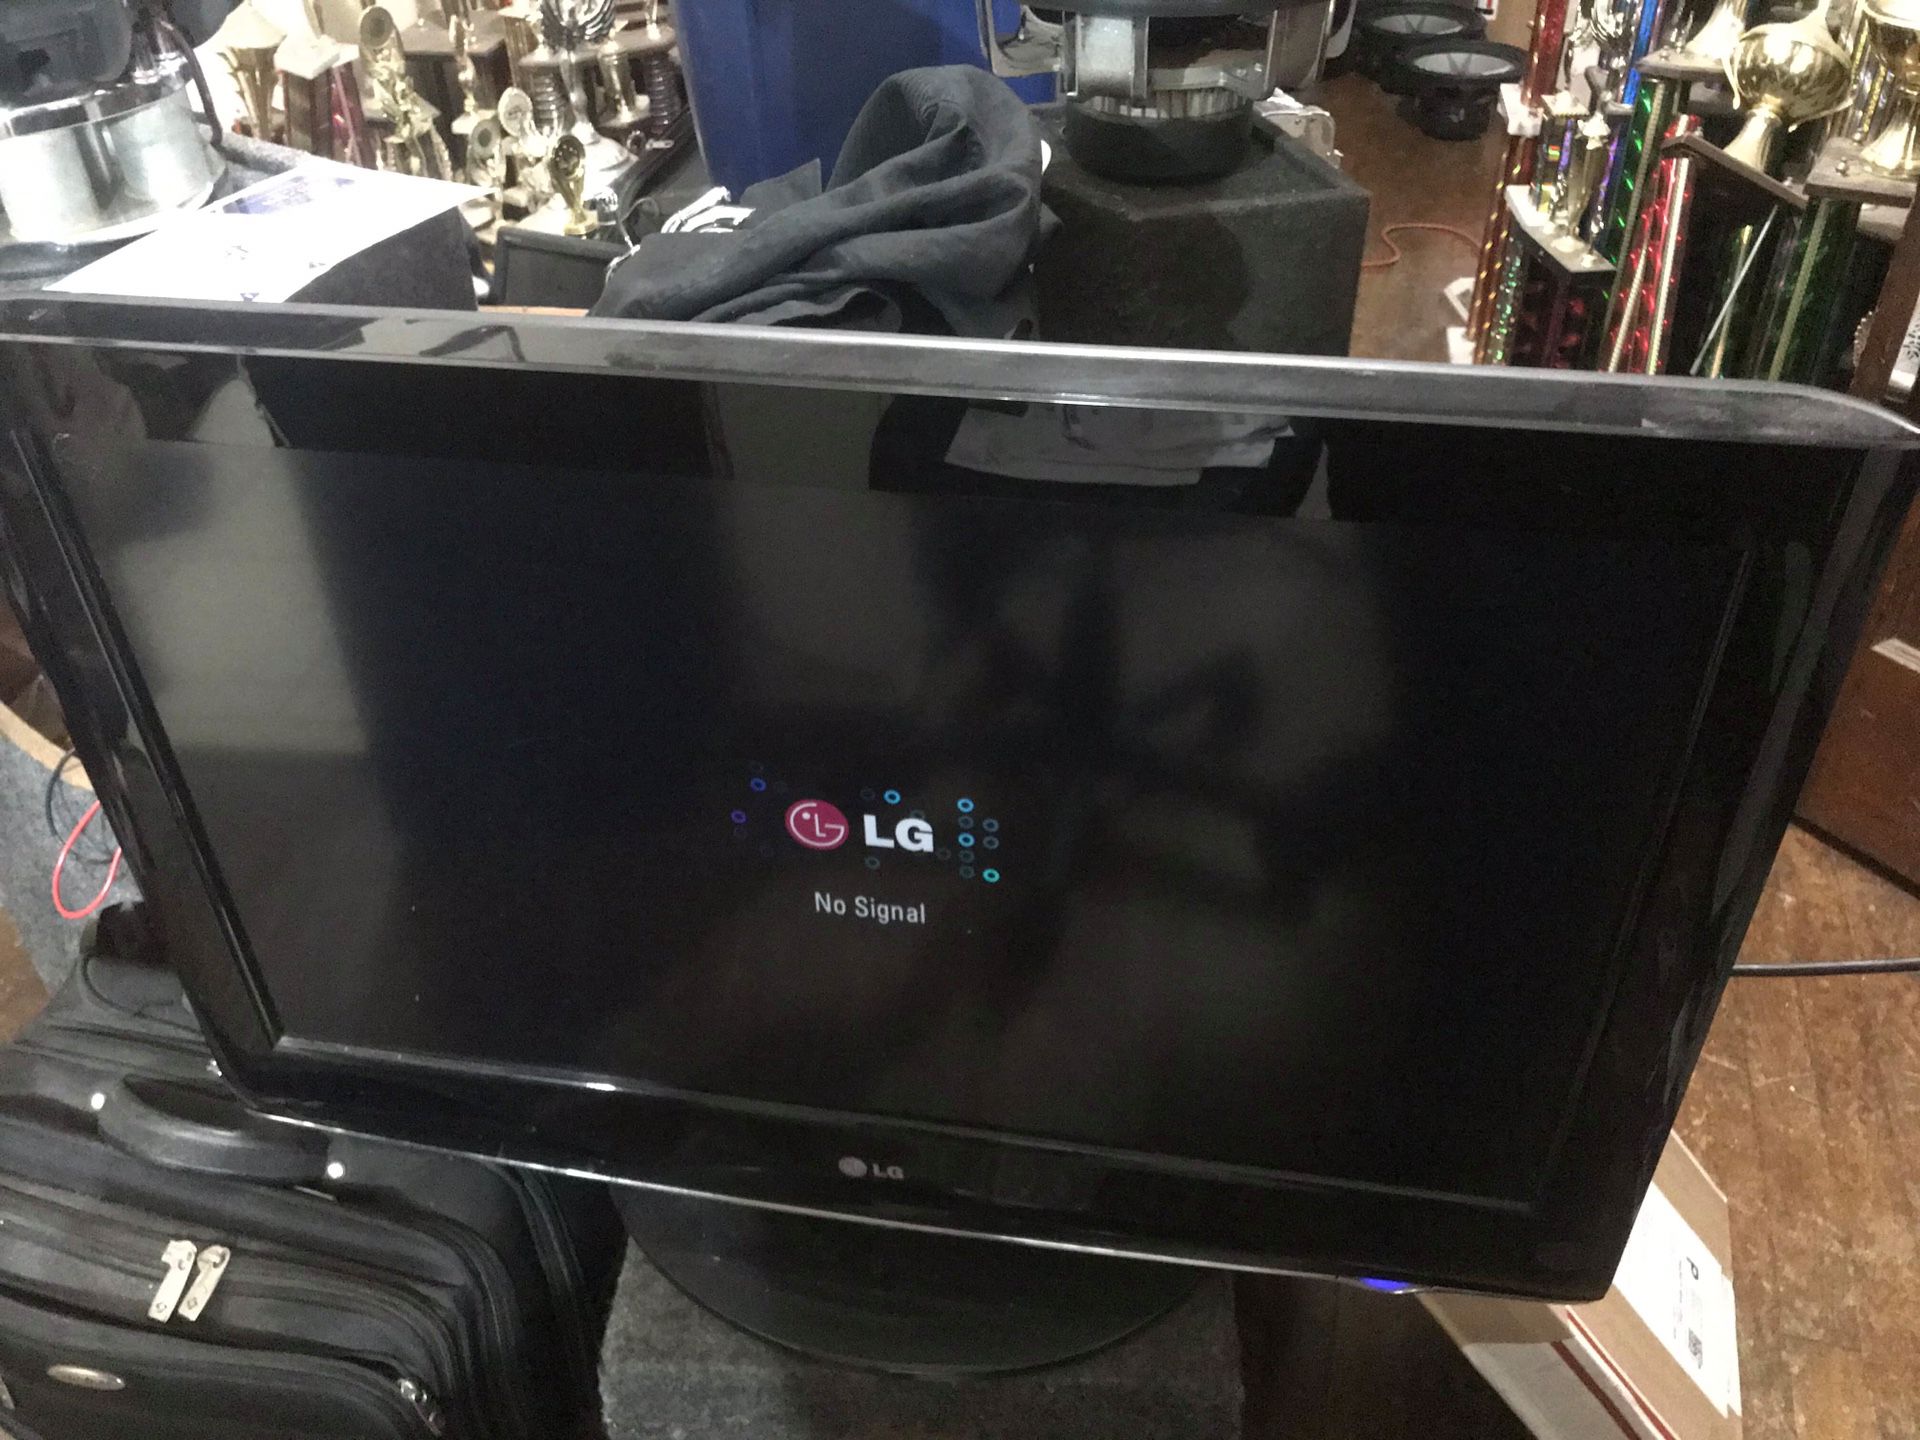 Watch NBA games on this 32” LG Flat Screen TV